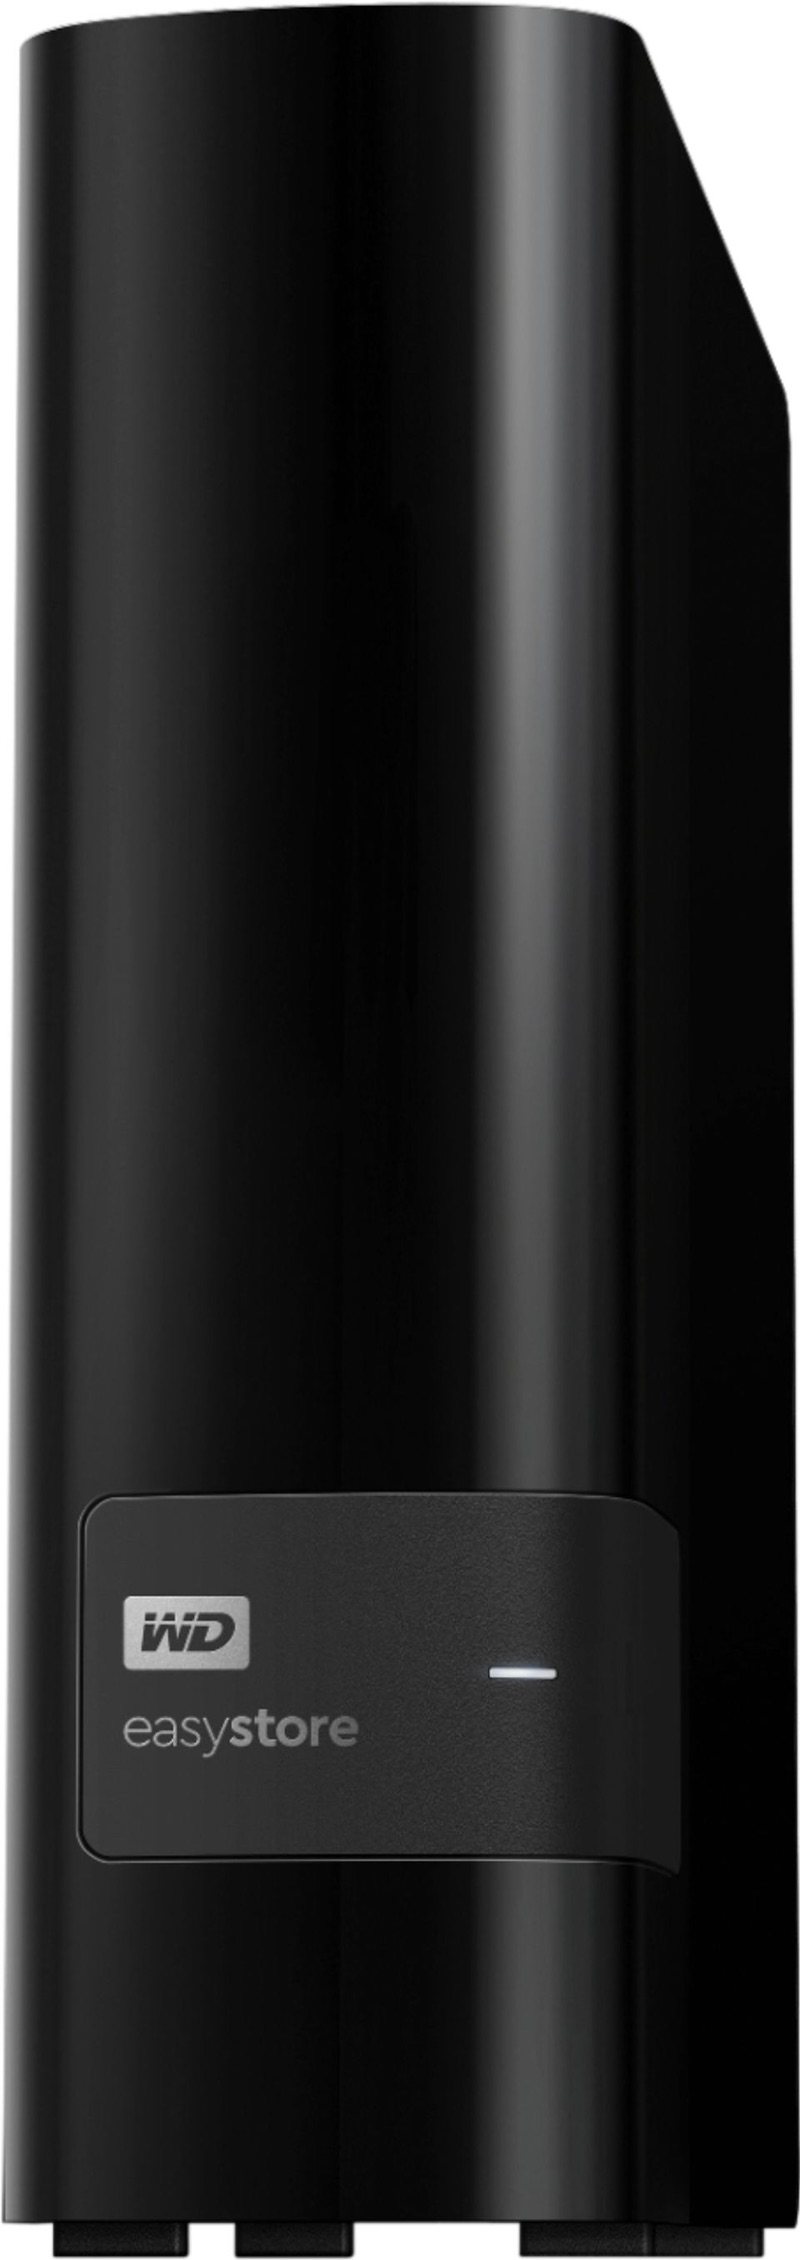 WD easystore 14TB External USB 3.0 Hard Drive Black 西部数据 外置硬盘- Best Buy